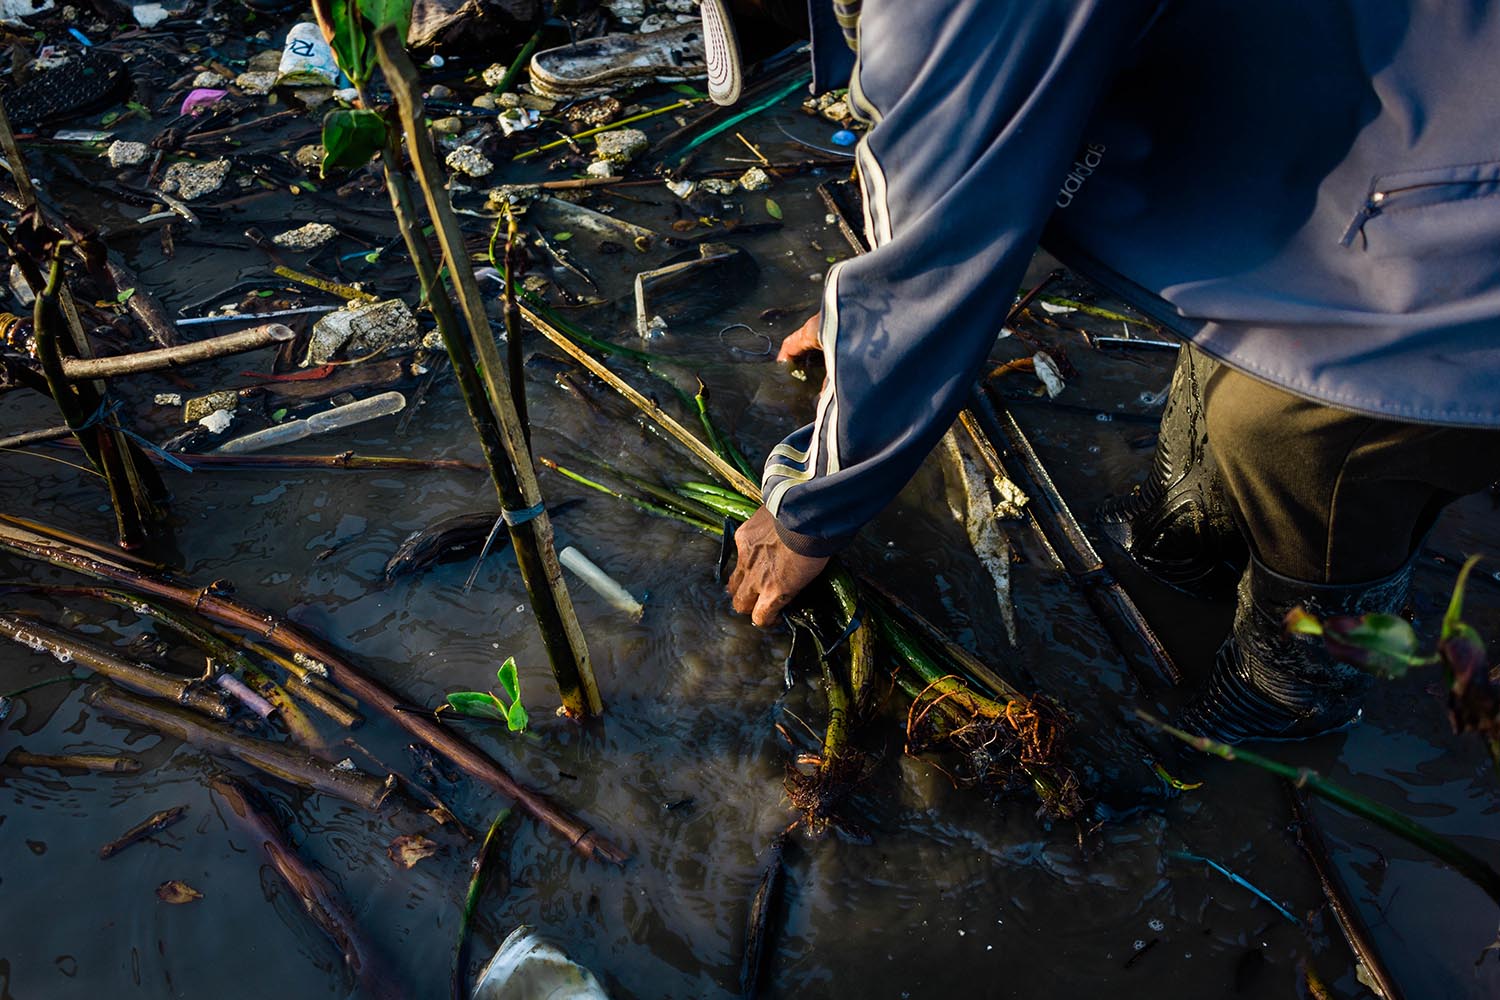 Mangroves have fallen down because of the waste-carrying waves. JP/Anggertimur Lanang Tinarbuko